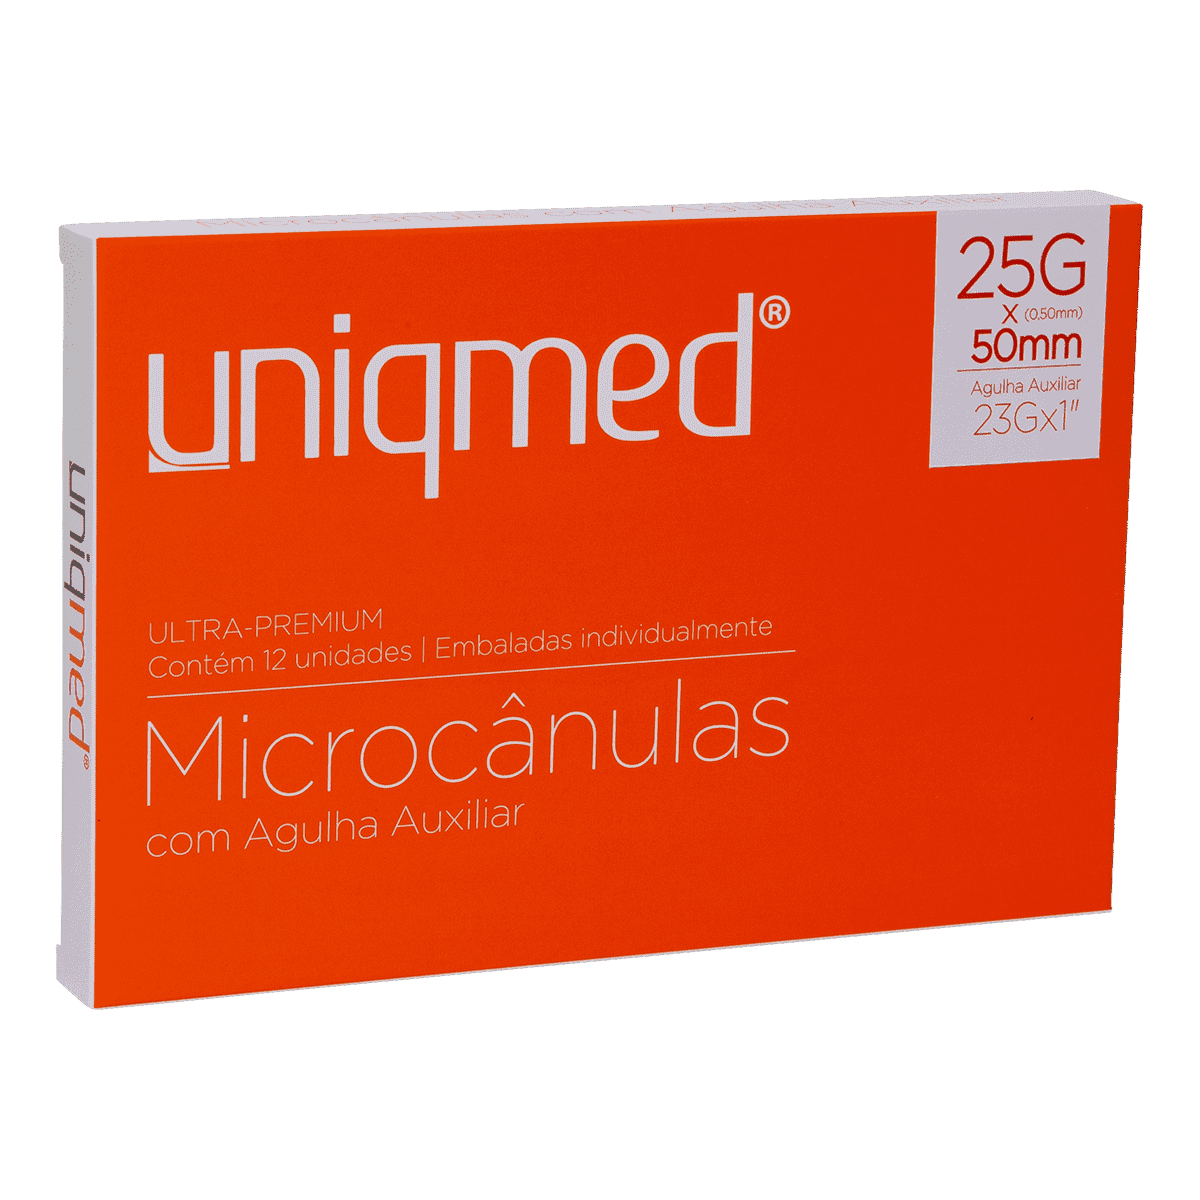 Microcânulas Uniqmed com Agulha Auxiliar - 25G (0.50mm) x 40mm - Caixa com 12 unidades